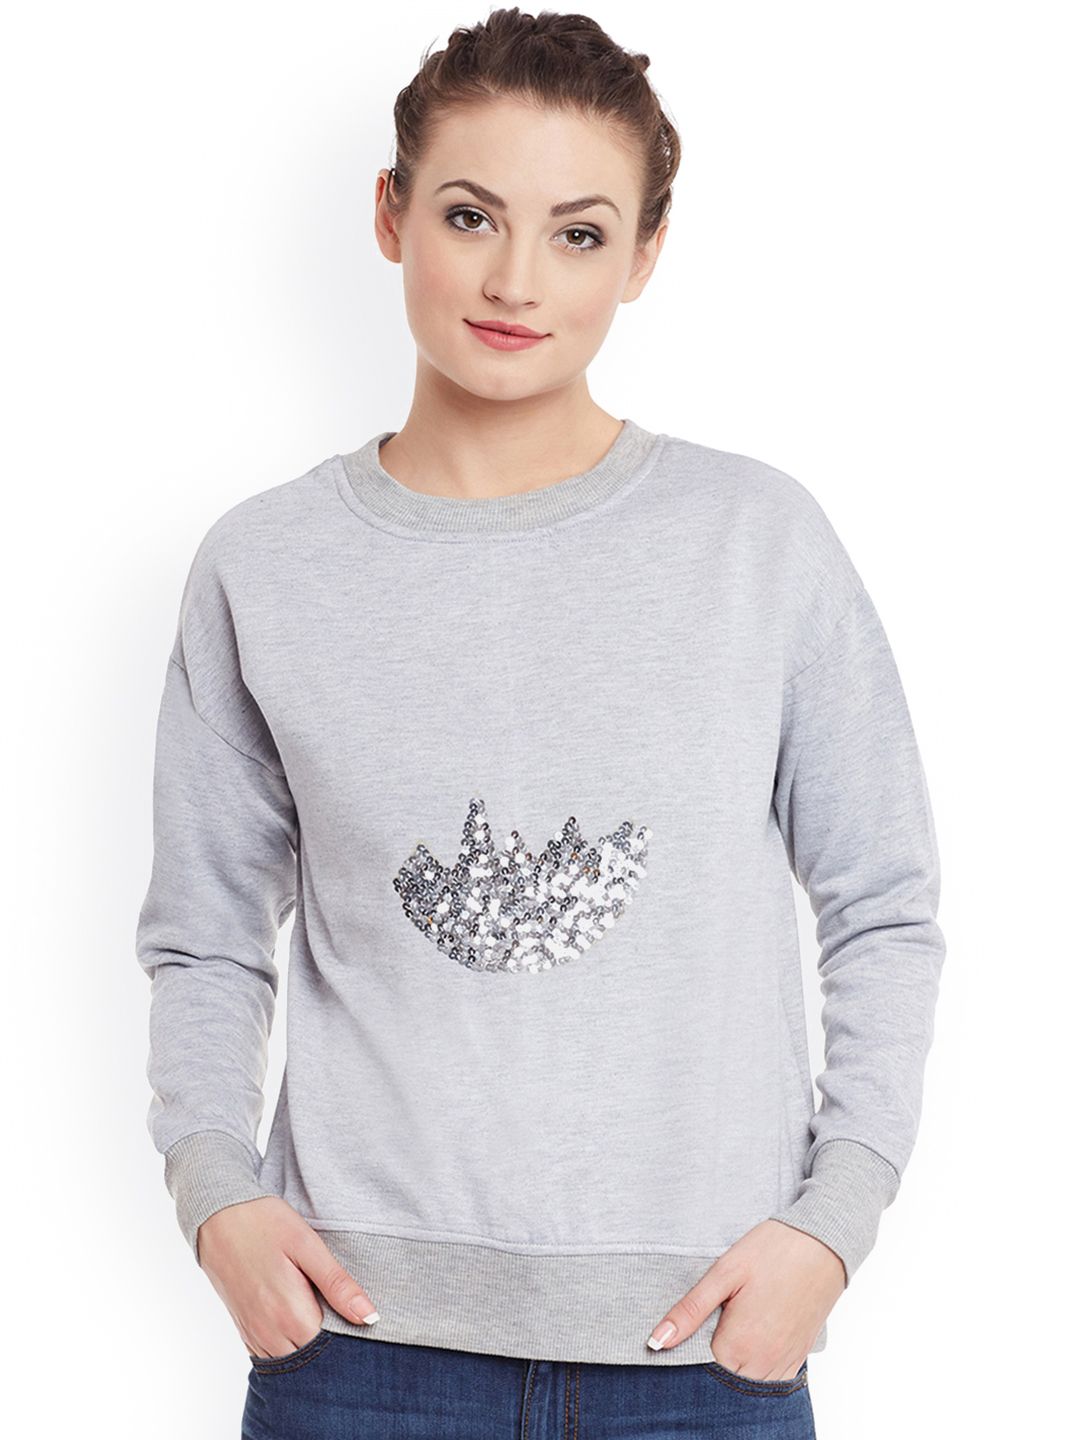 Belle Fille Grey Sweatshirt Price in India